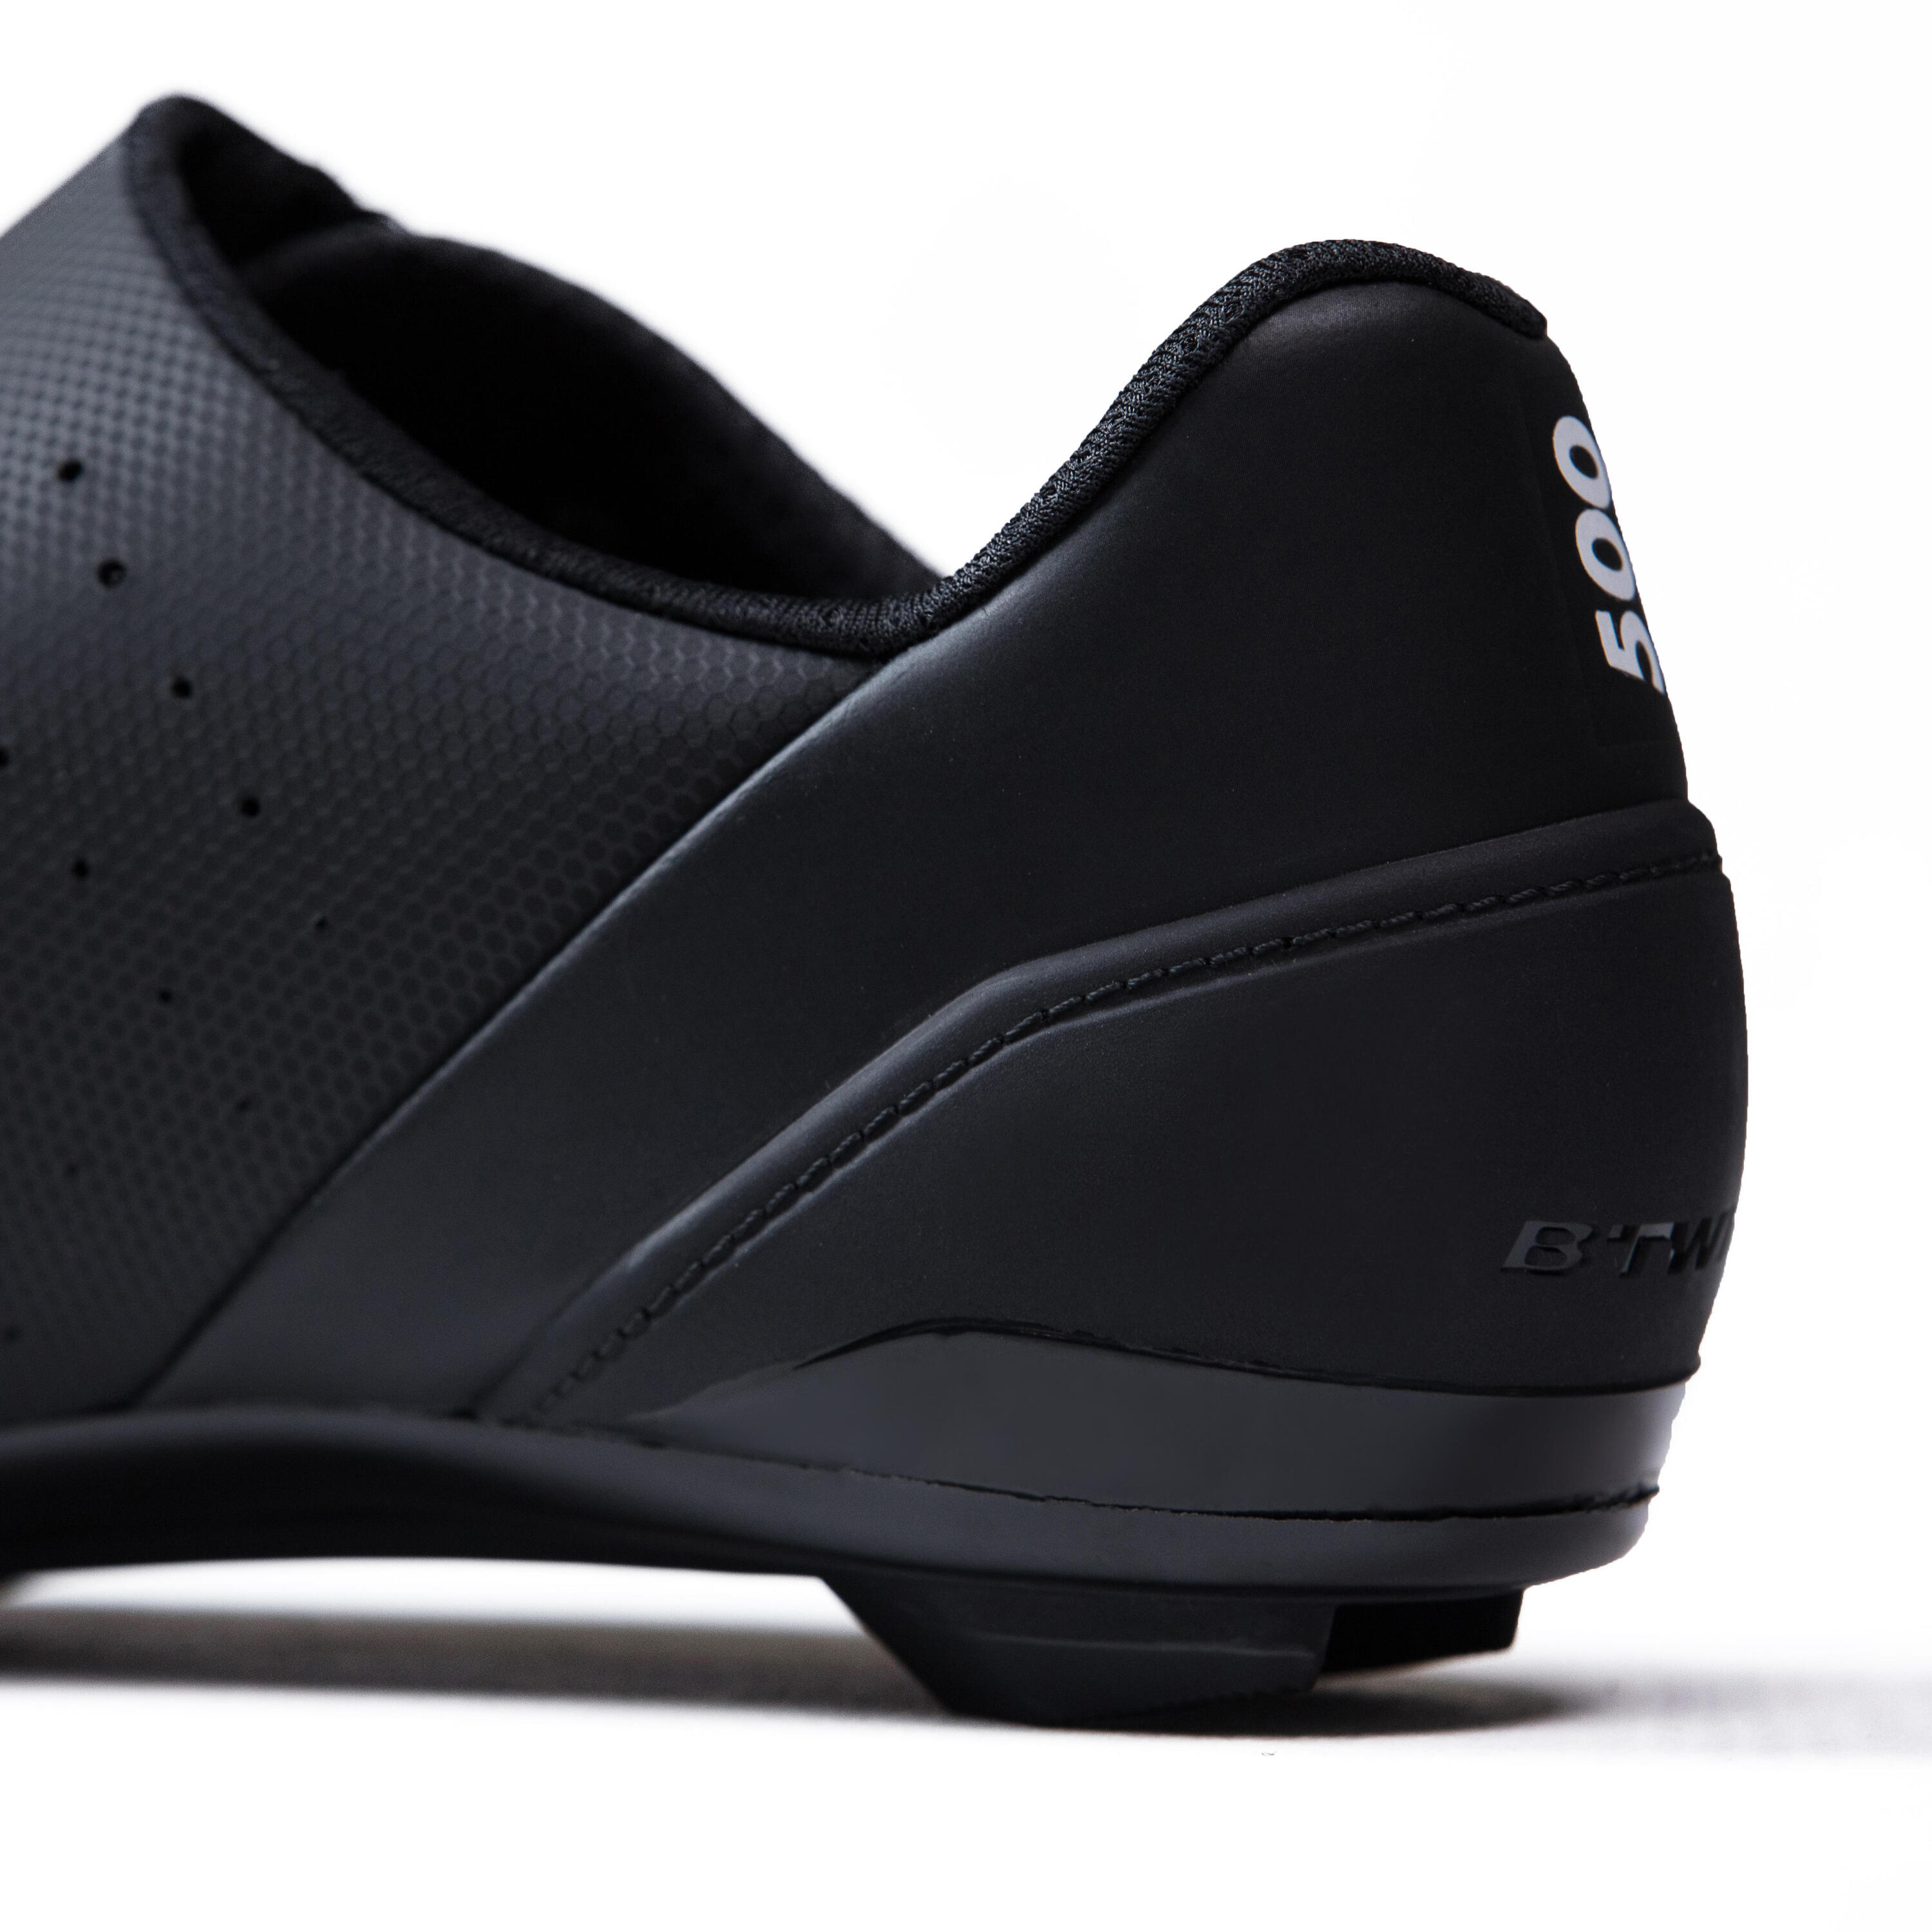 500 Sport Cycling Road Cycling Shoes - Black 5/6